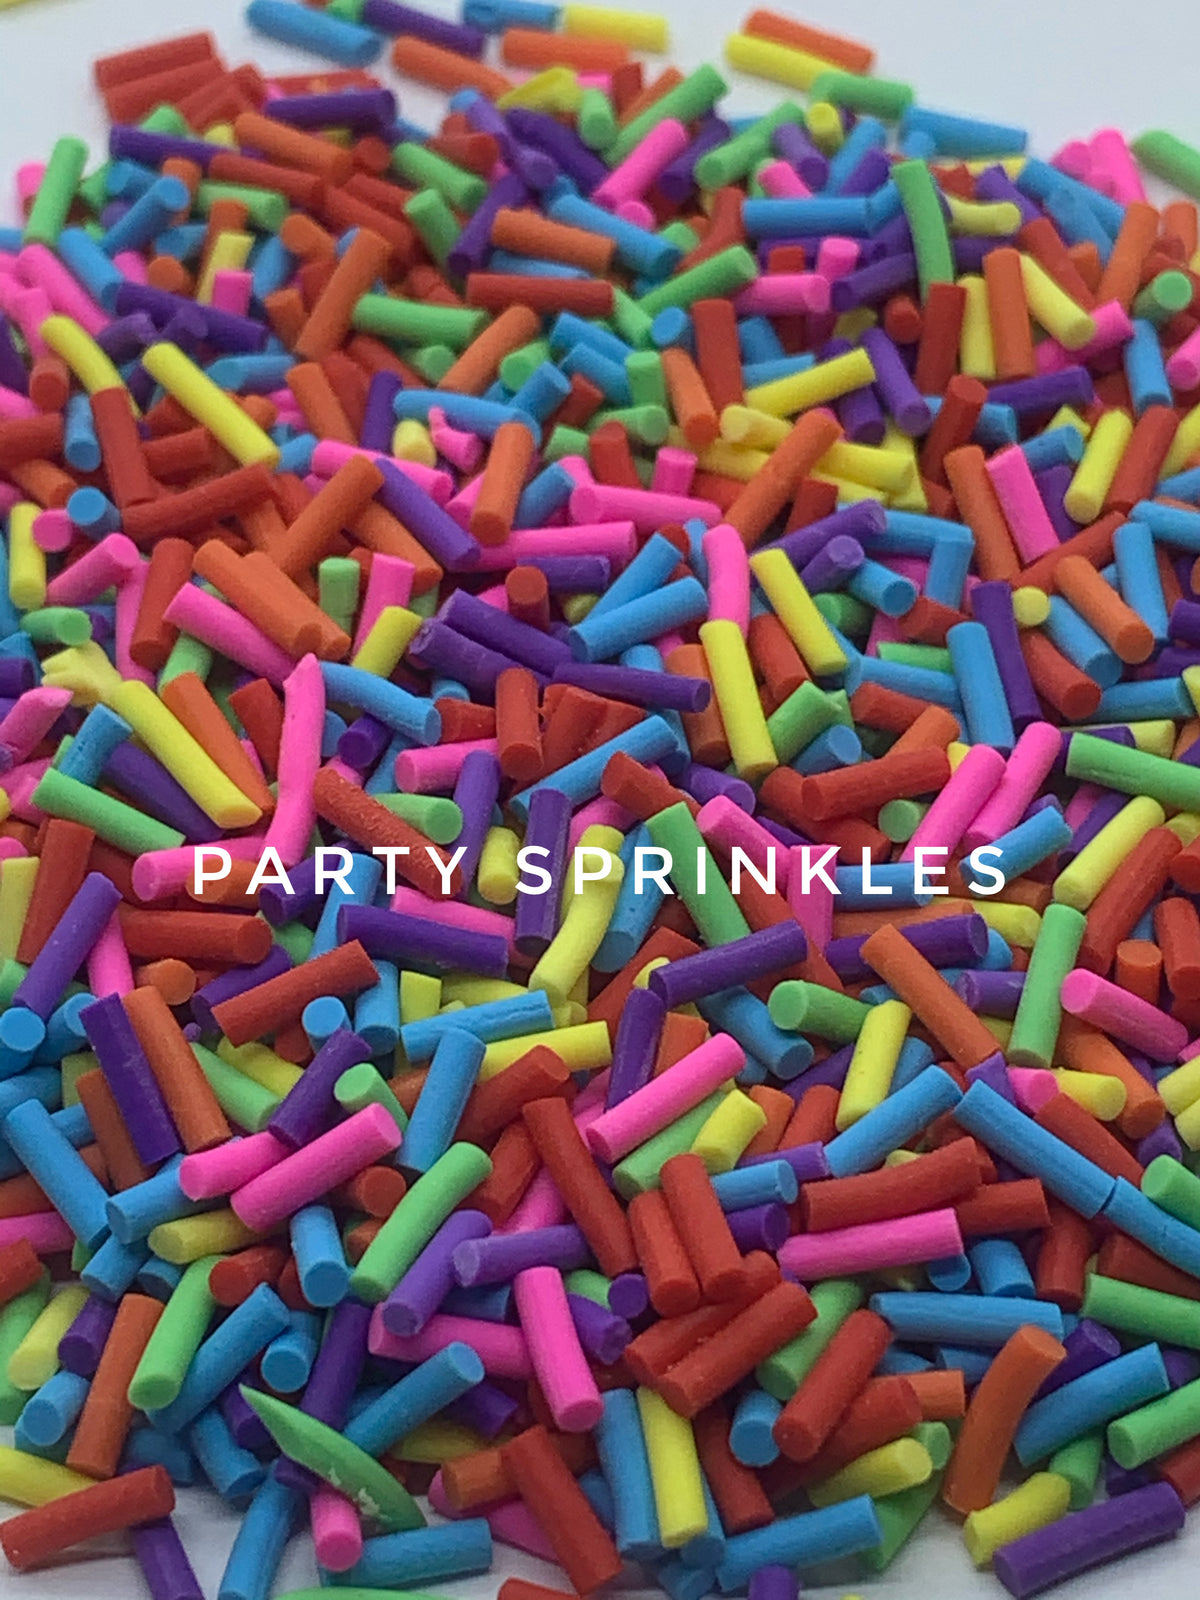 Party Sprinkles